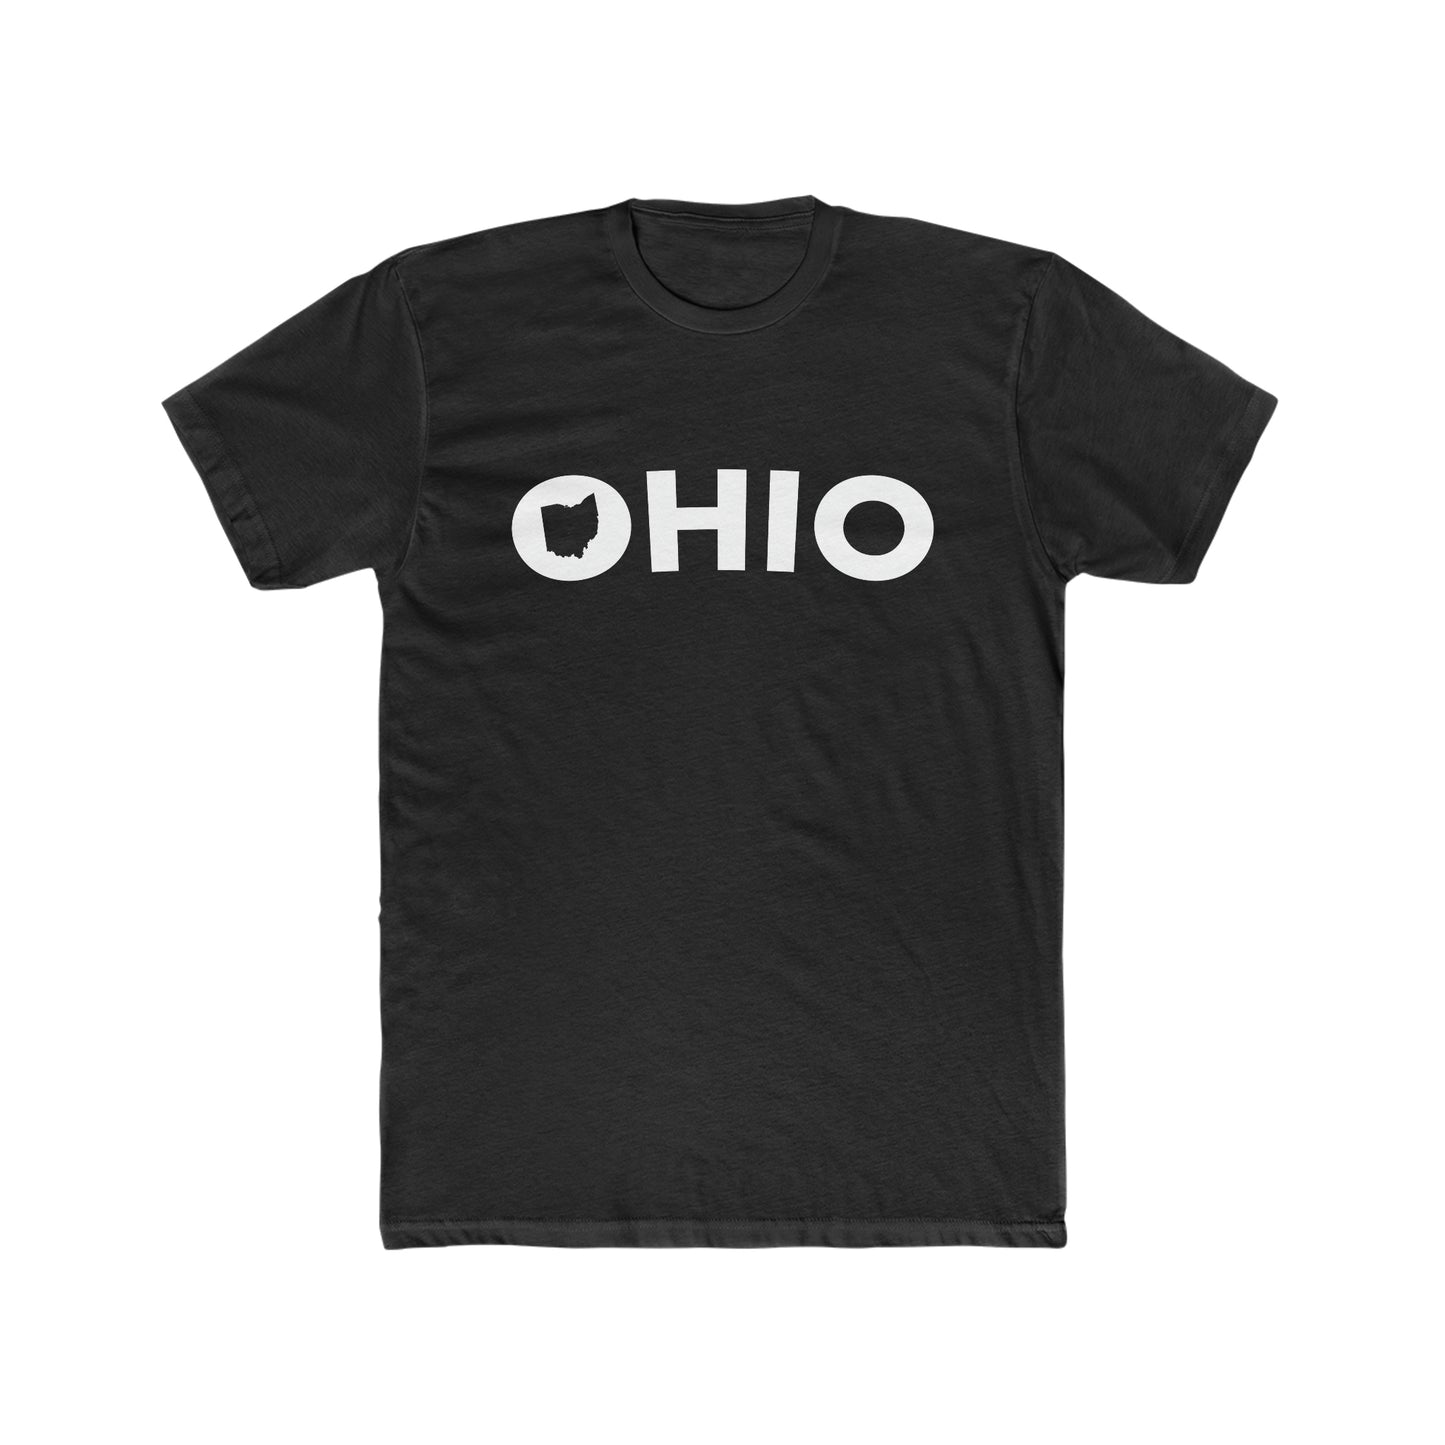 Ohio Shirt Cleveland Columbus Cincinnati Buckeye State Unisex Cotton Crew Tee